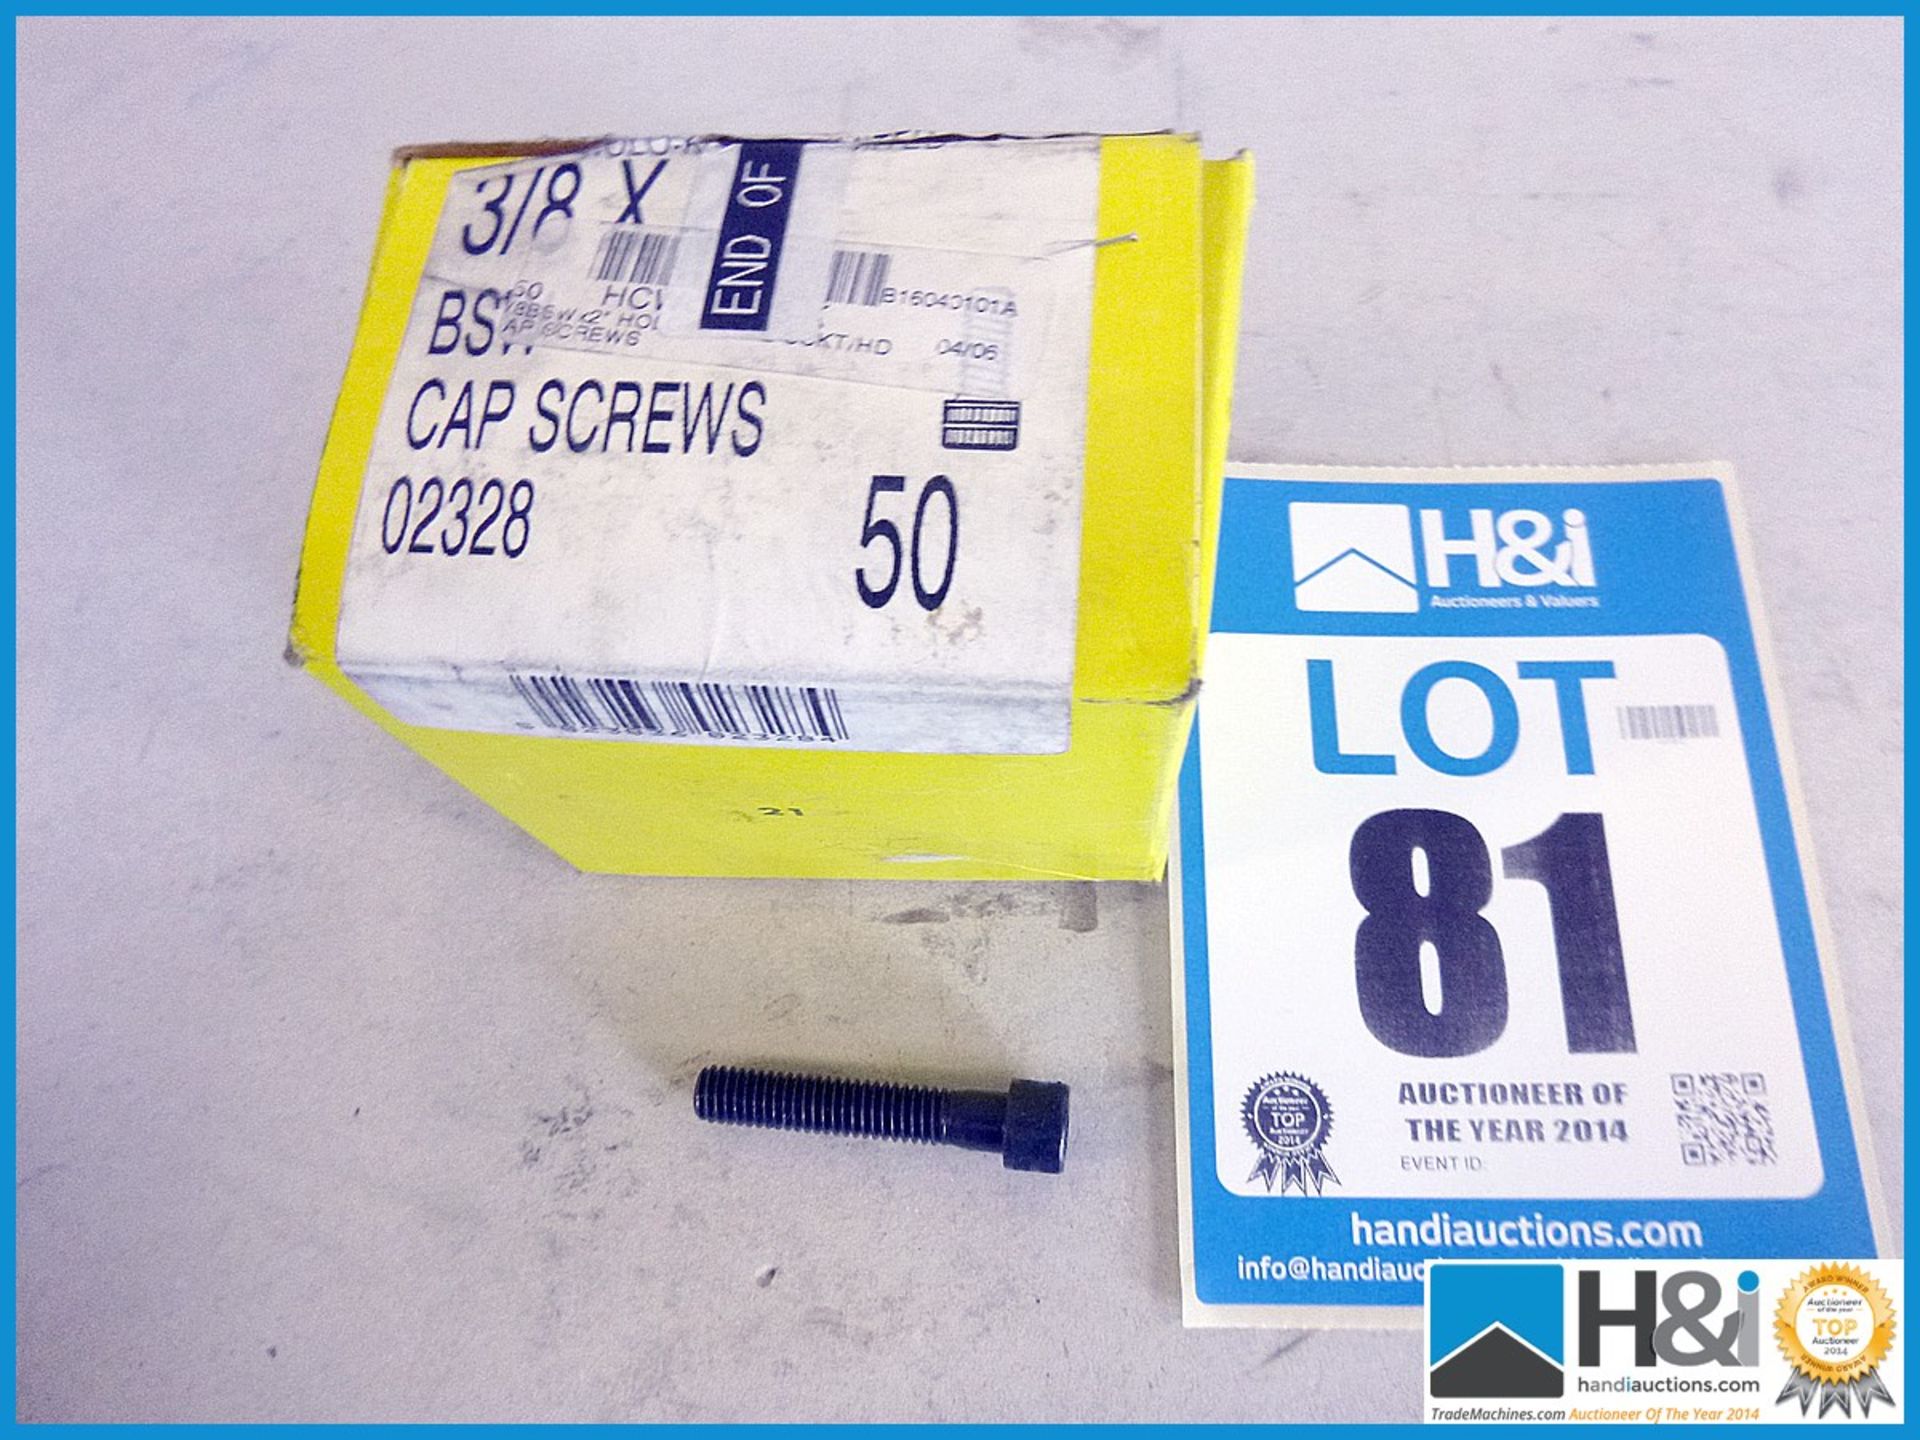 3/8BSWx2" HOLO-KROME SCKT/HD CAP SCREWS. X2 boxes. Appraisal: New, unused in original packaging.